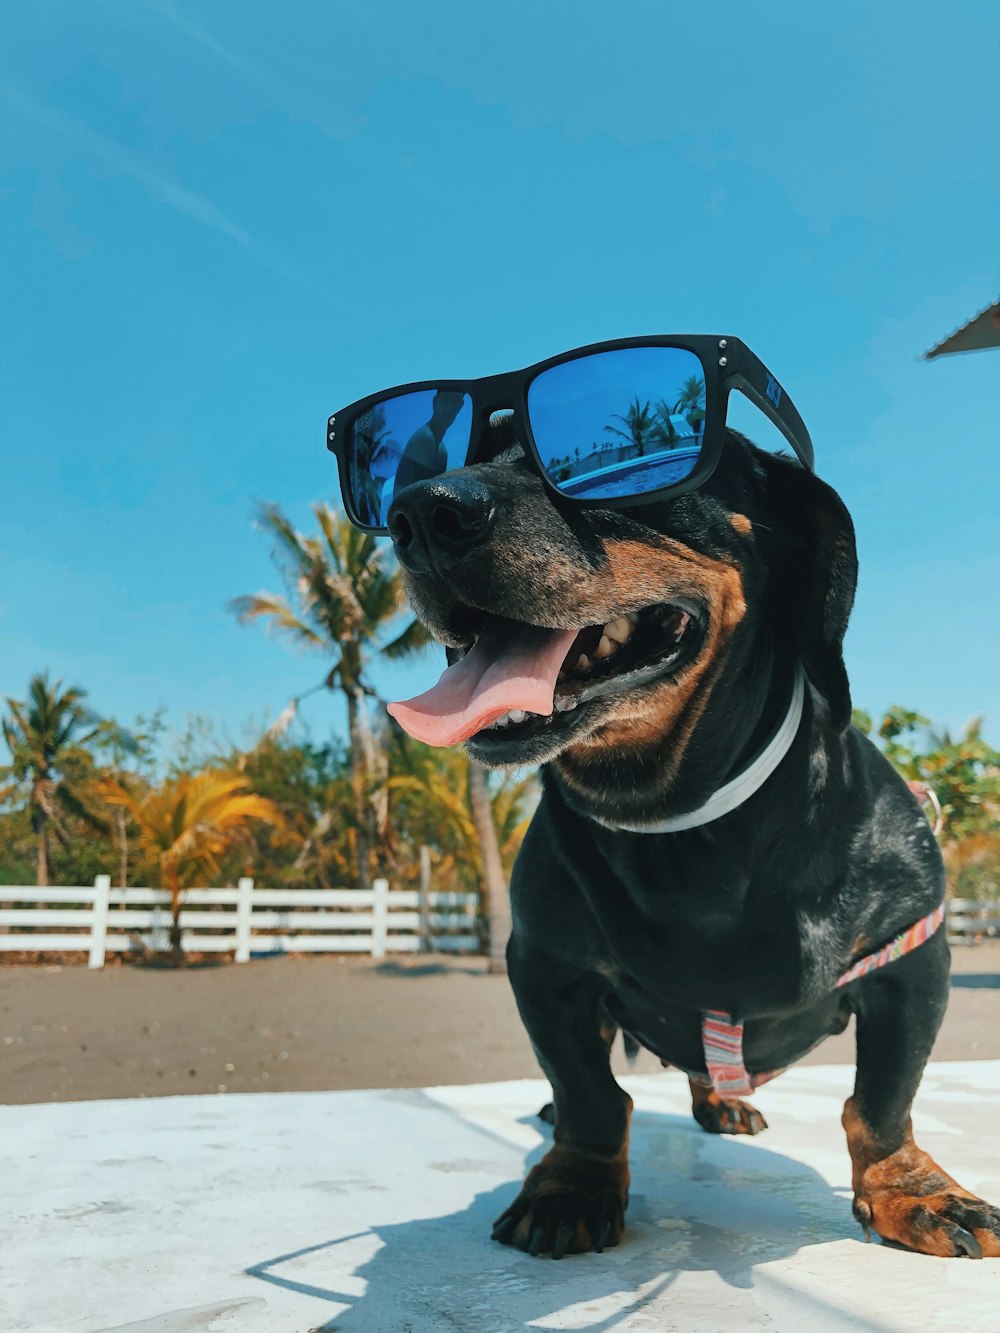 500+ Funny Dog Pictures | Download Free Images on Unsplash